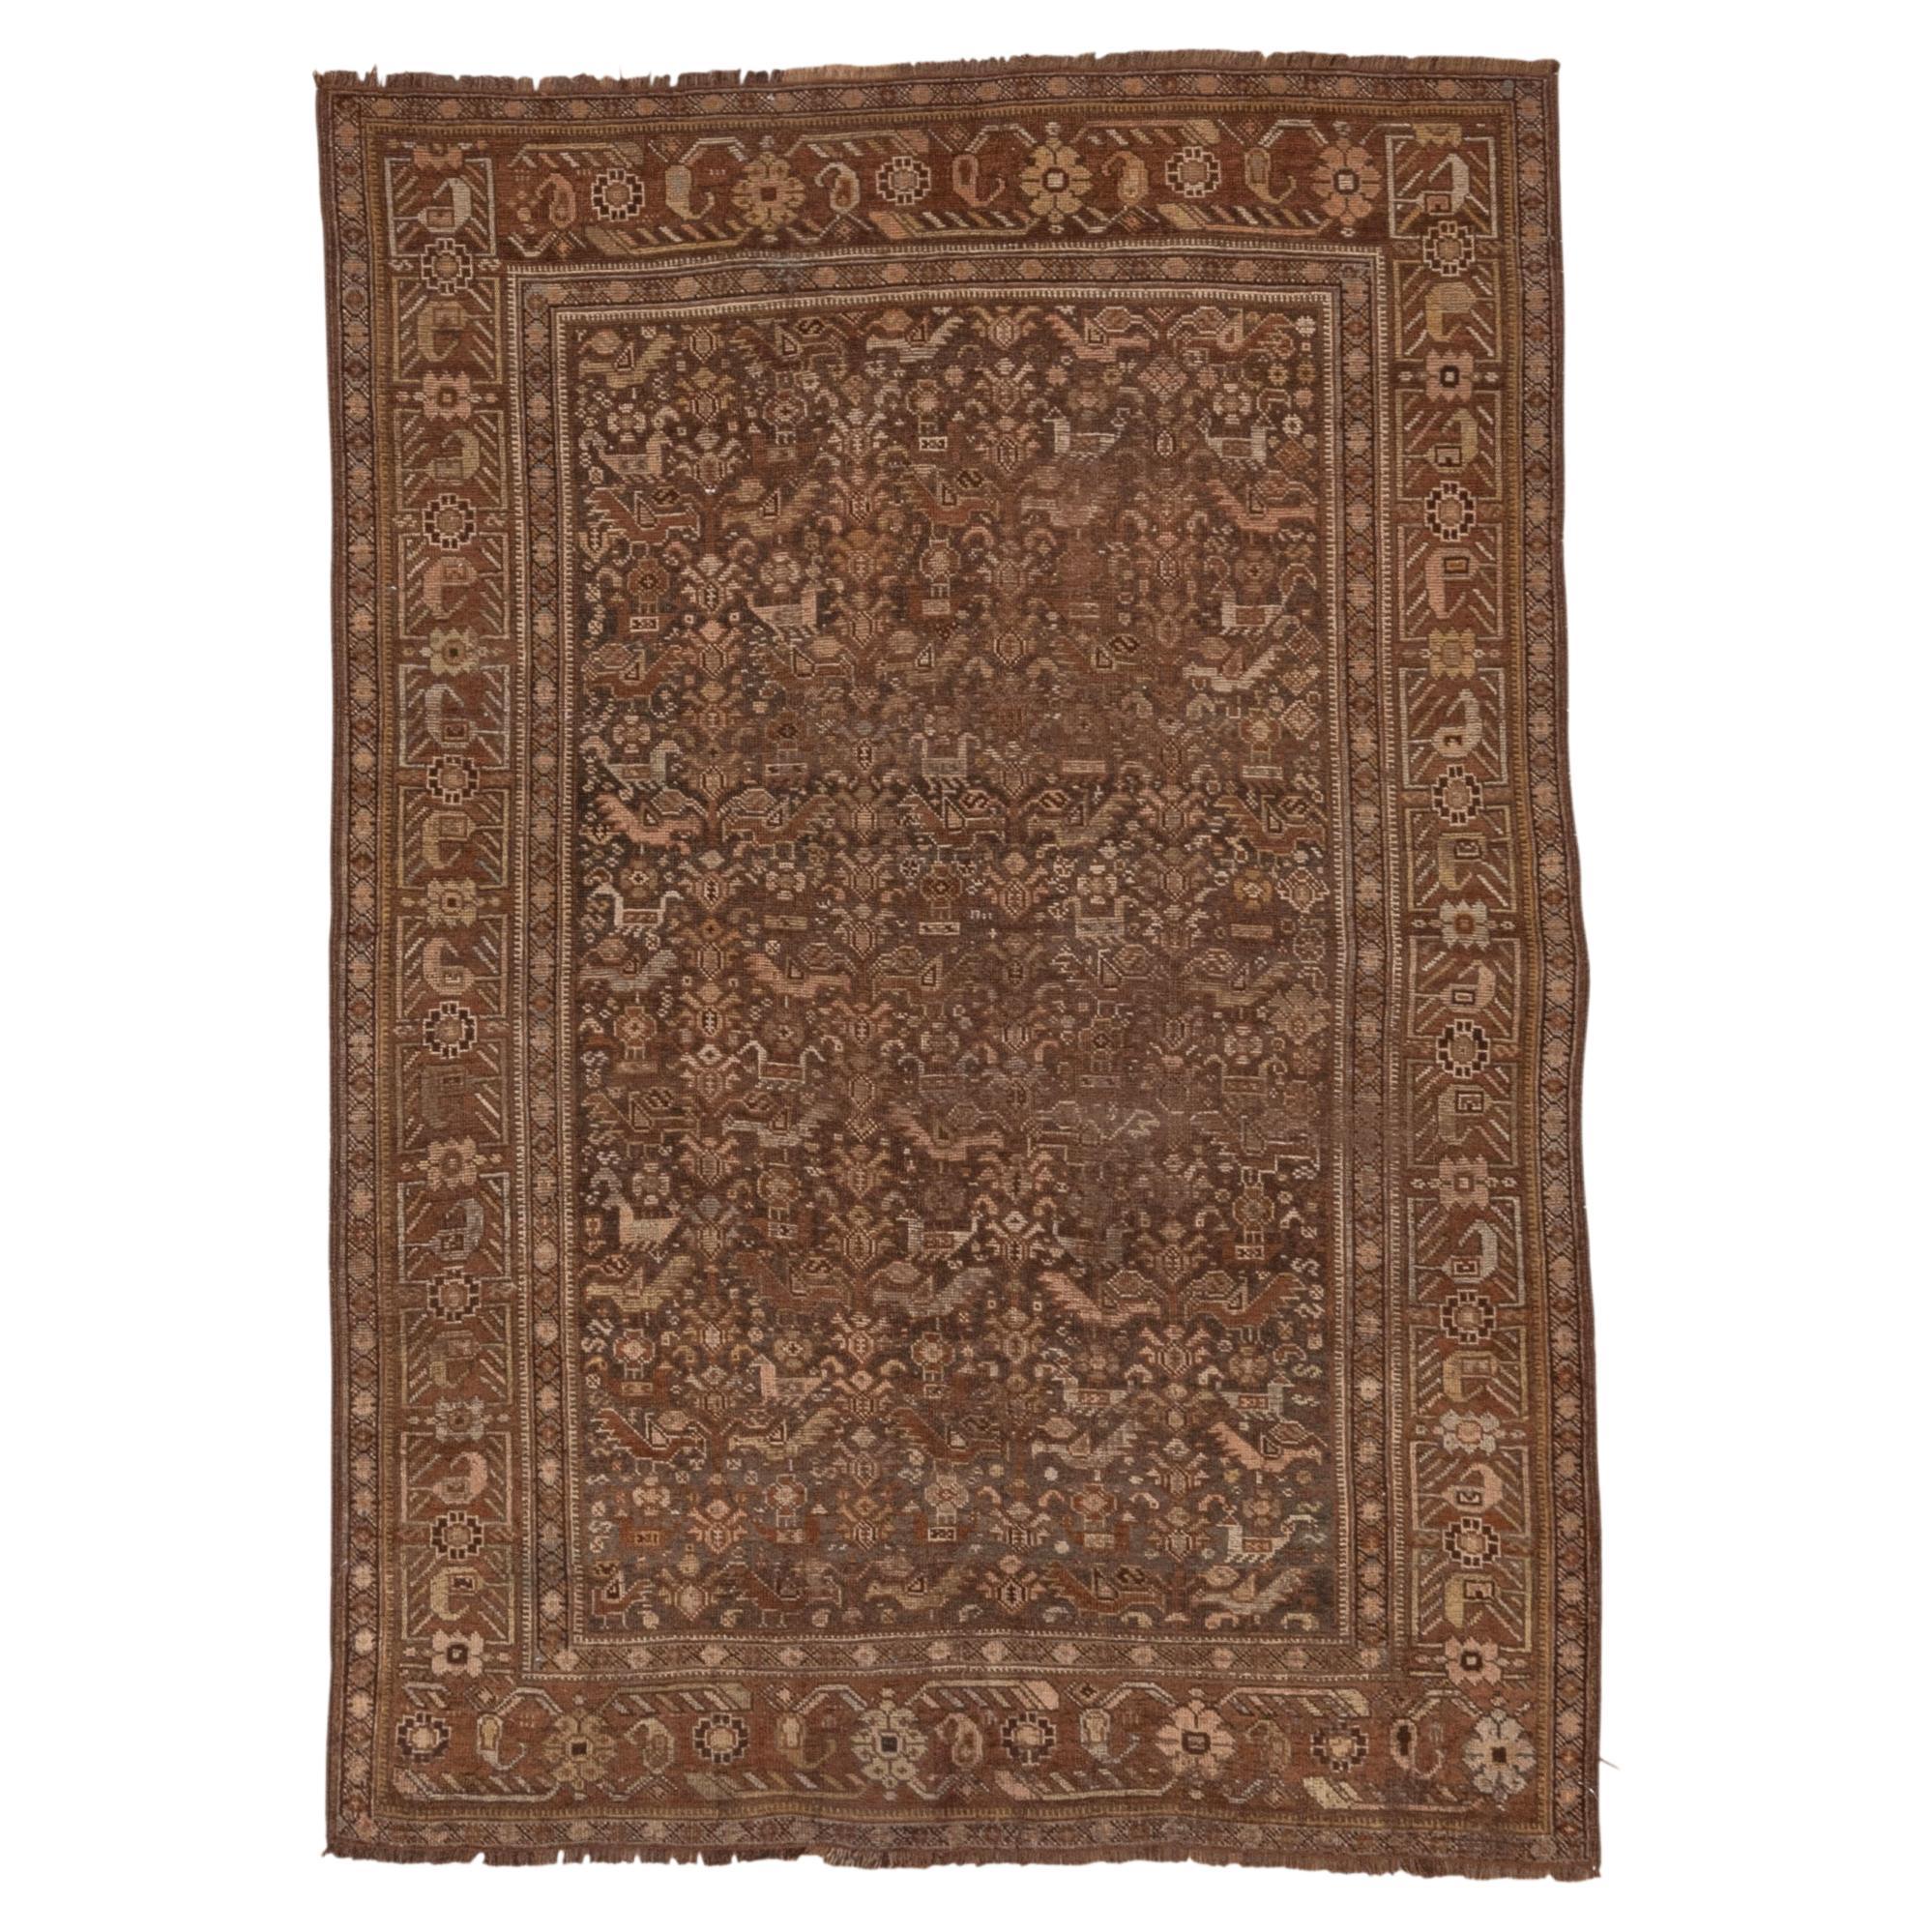 Rustic Persian Shiraz Pictorial Rug, Brown & Rust Tones, circa 1920s For Sale